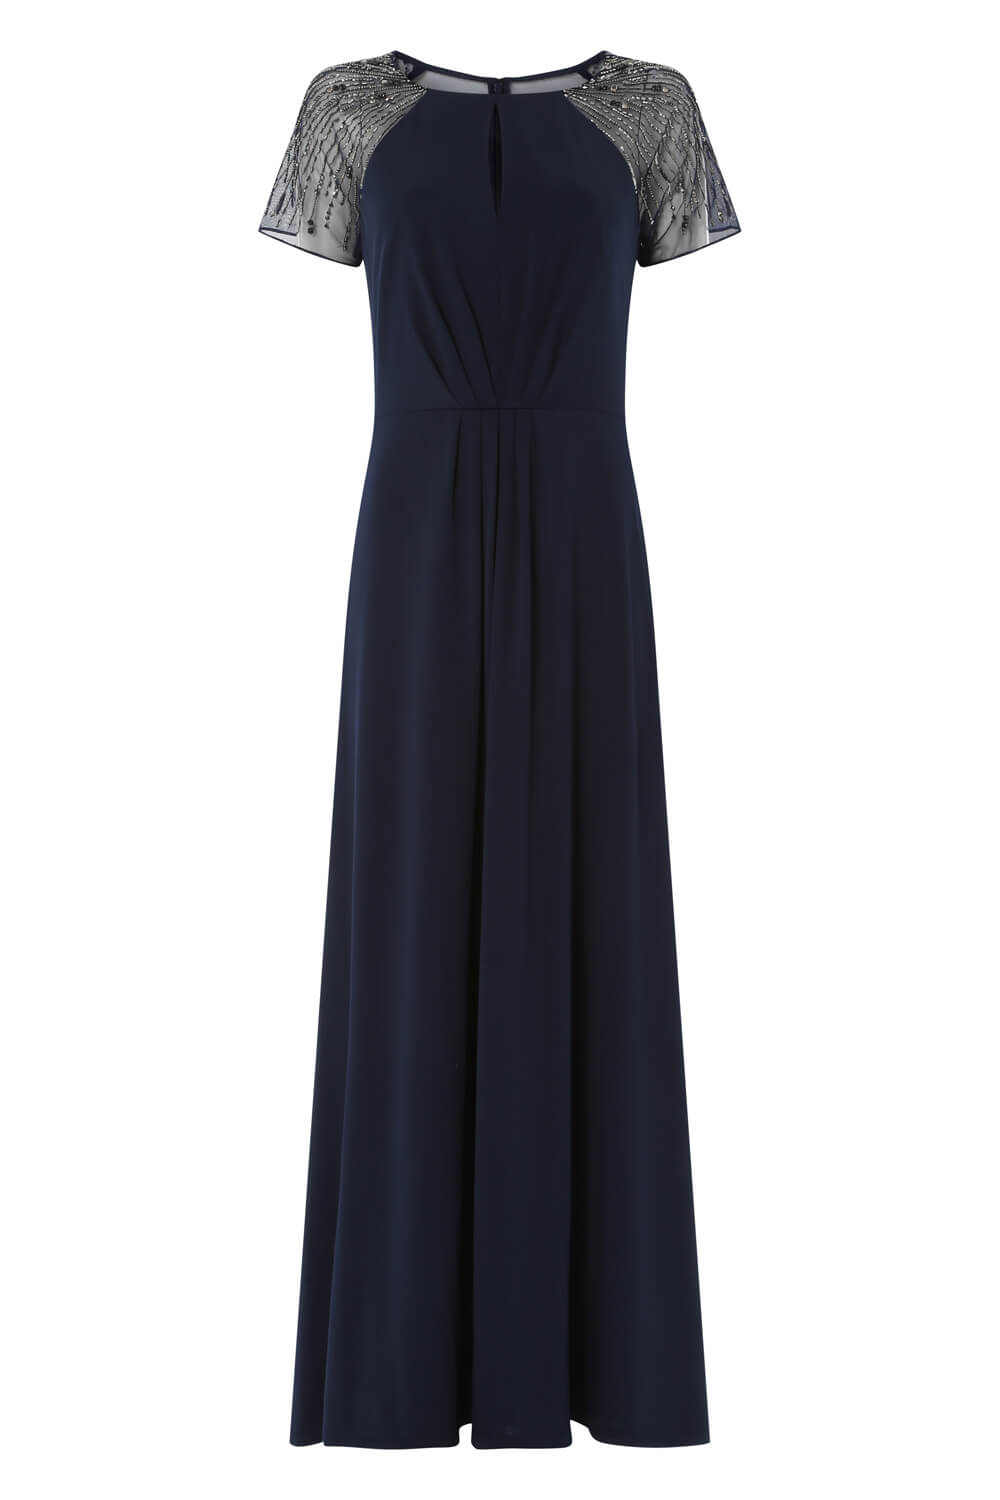 Embellished Sleeve Jersey Maxi Dress in Navy - Roman Originals UK